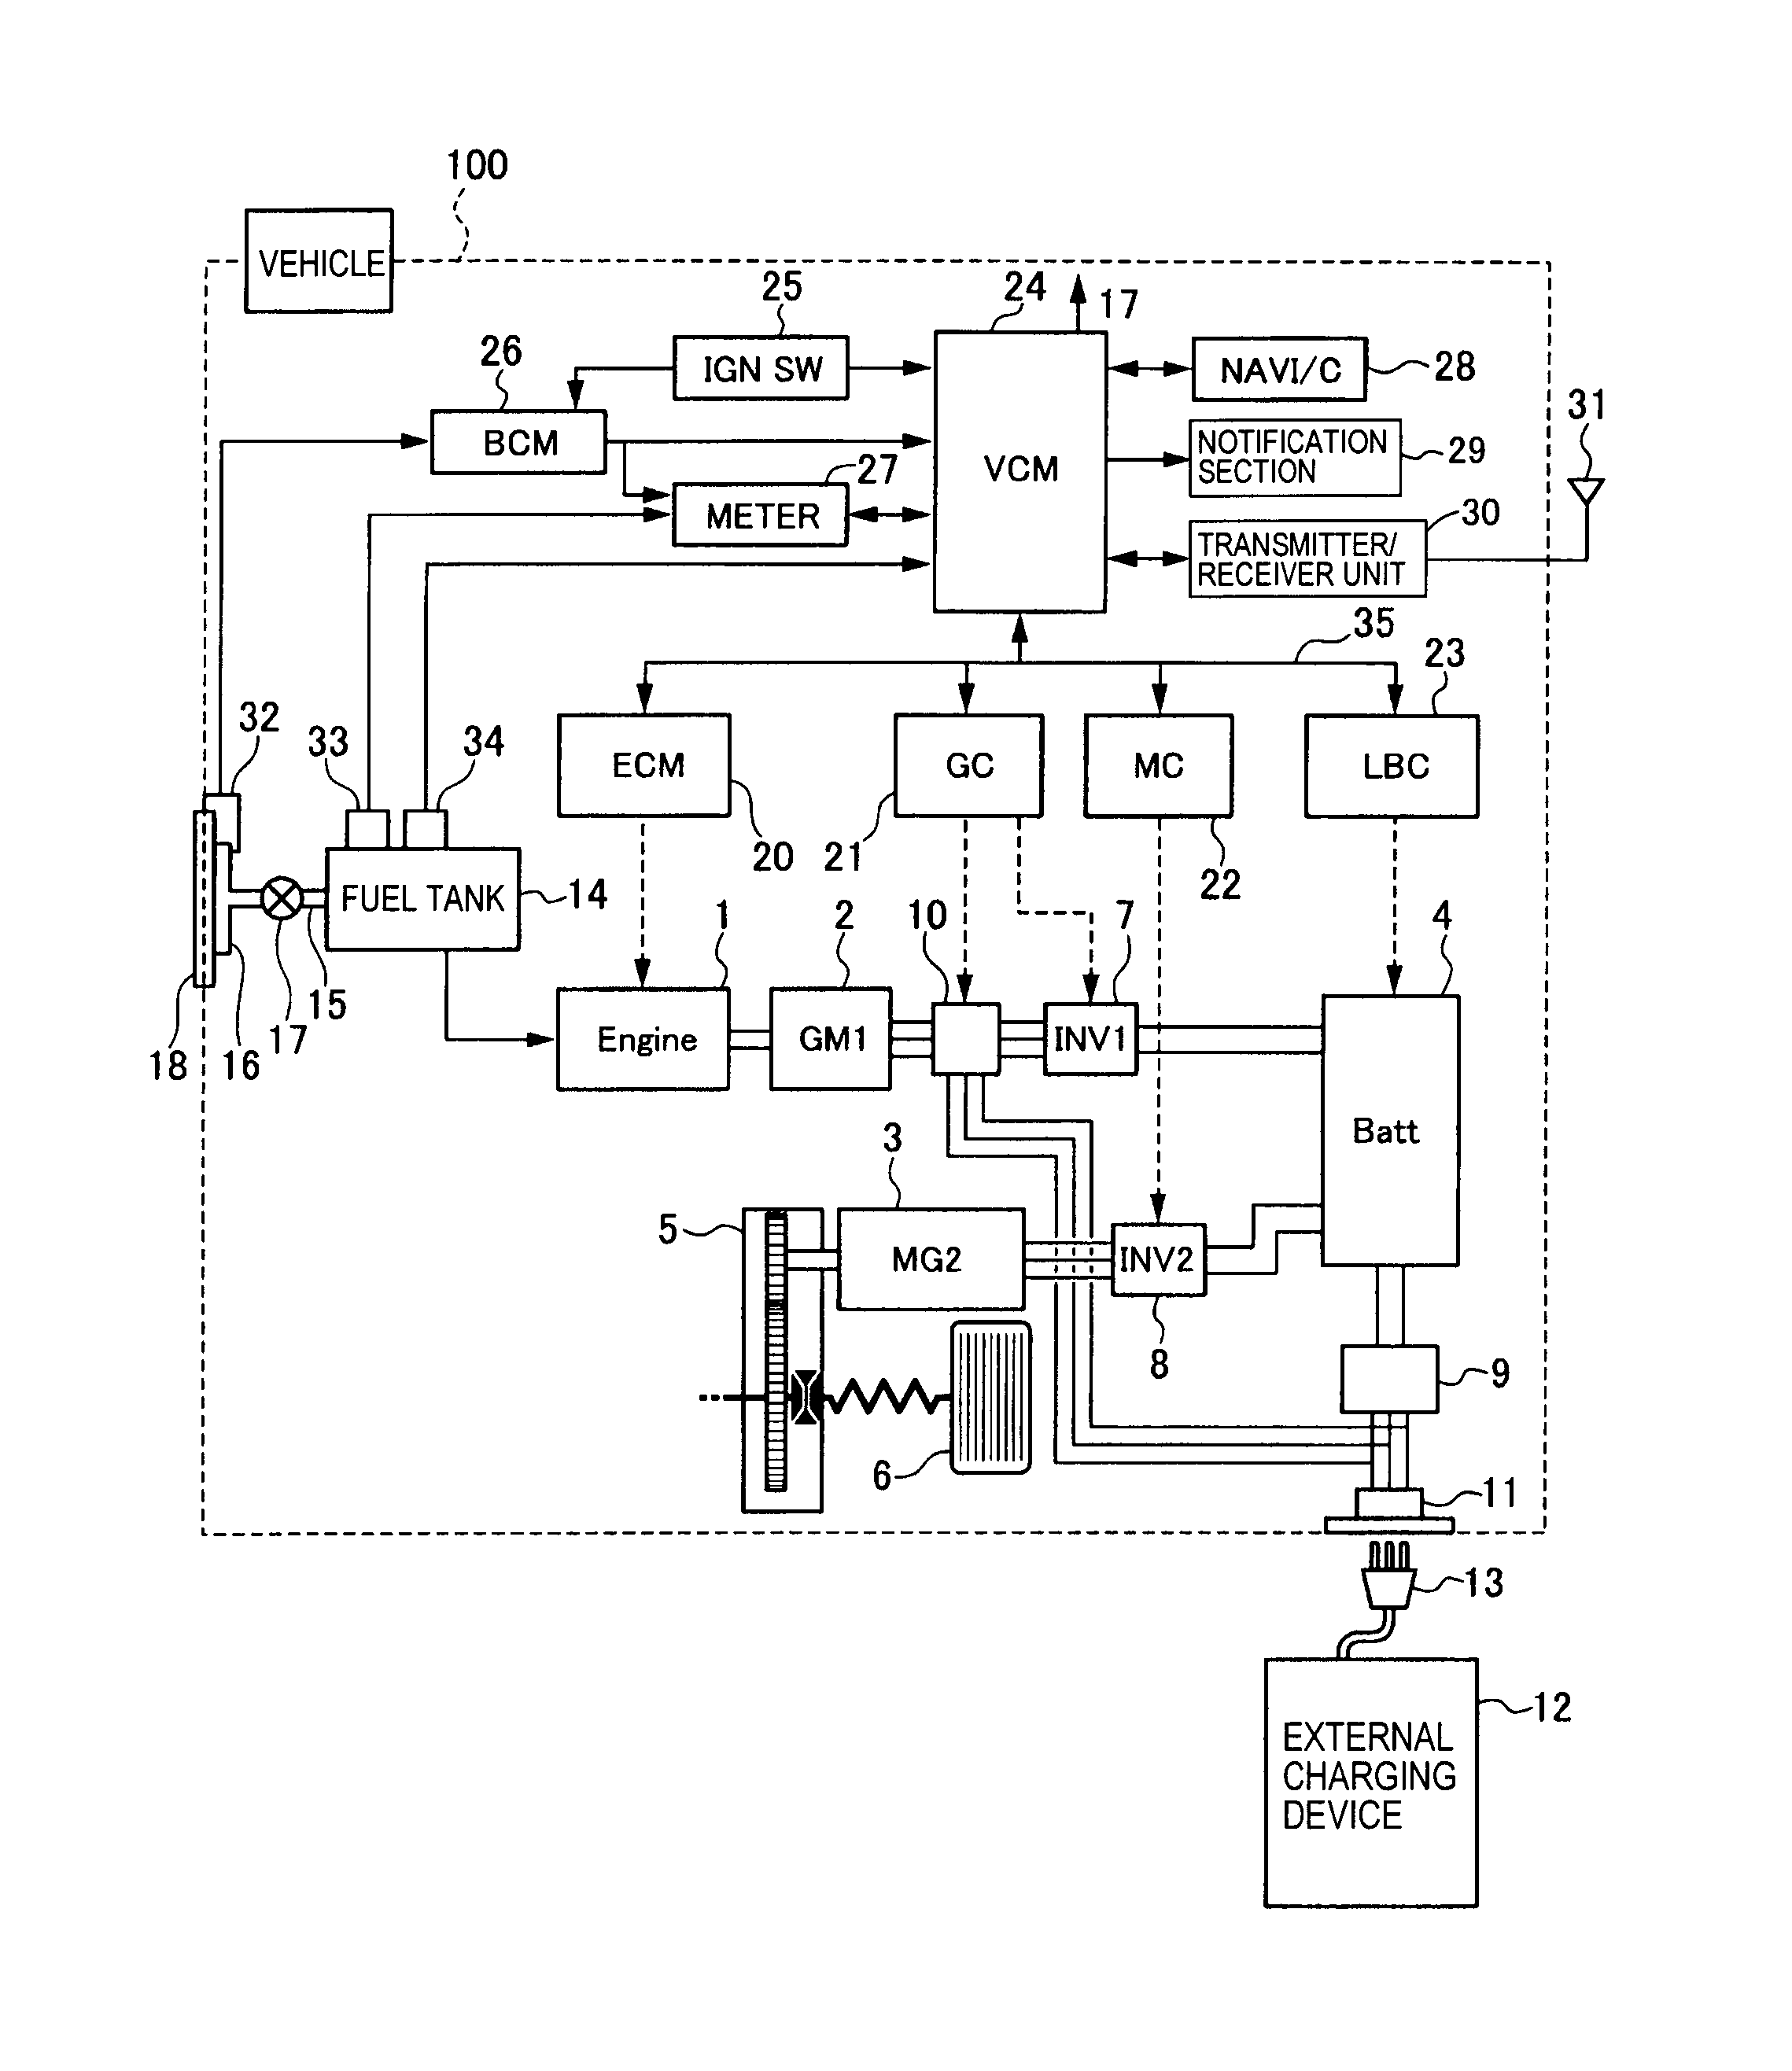 tripac wiring diagram